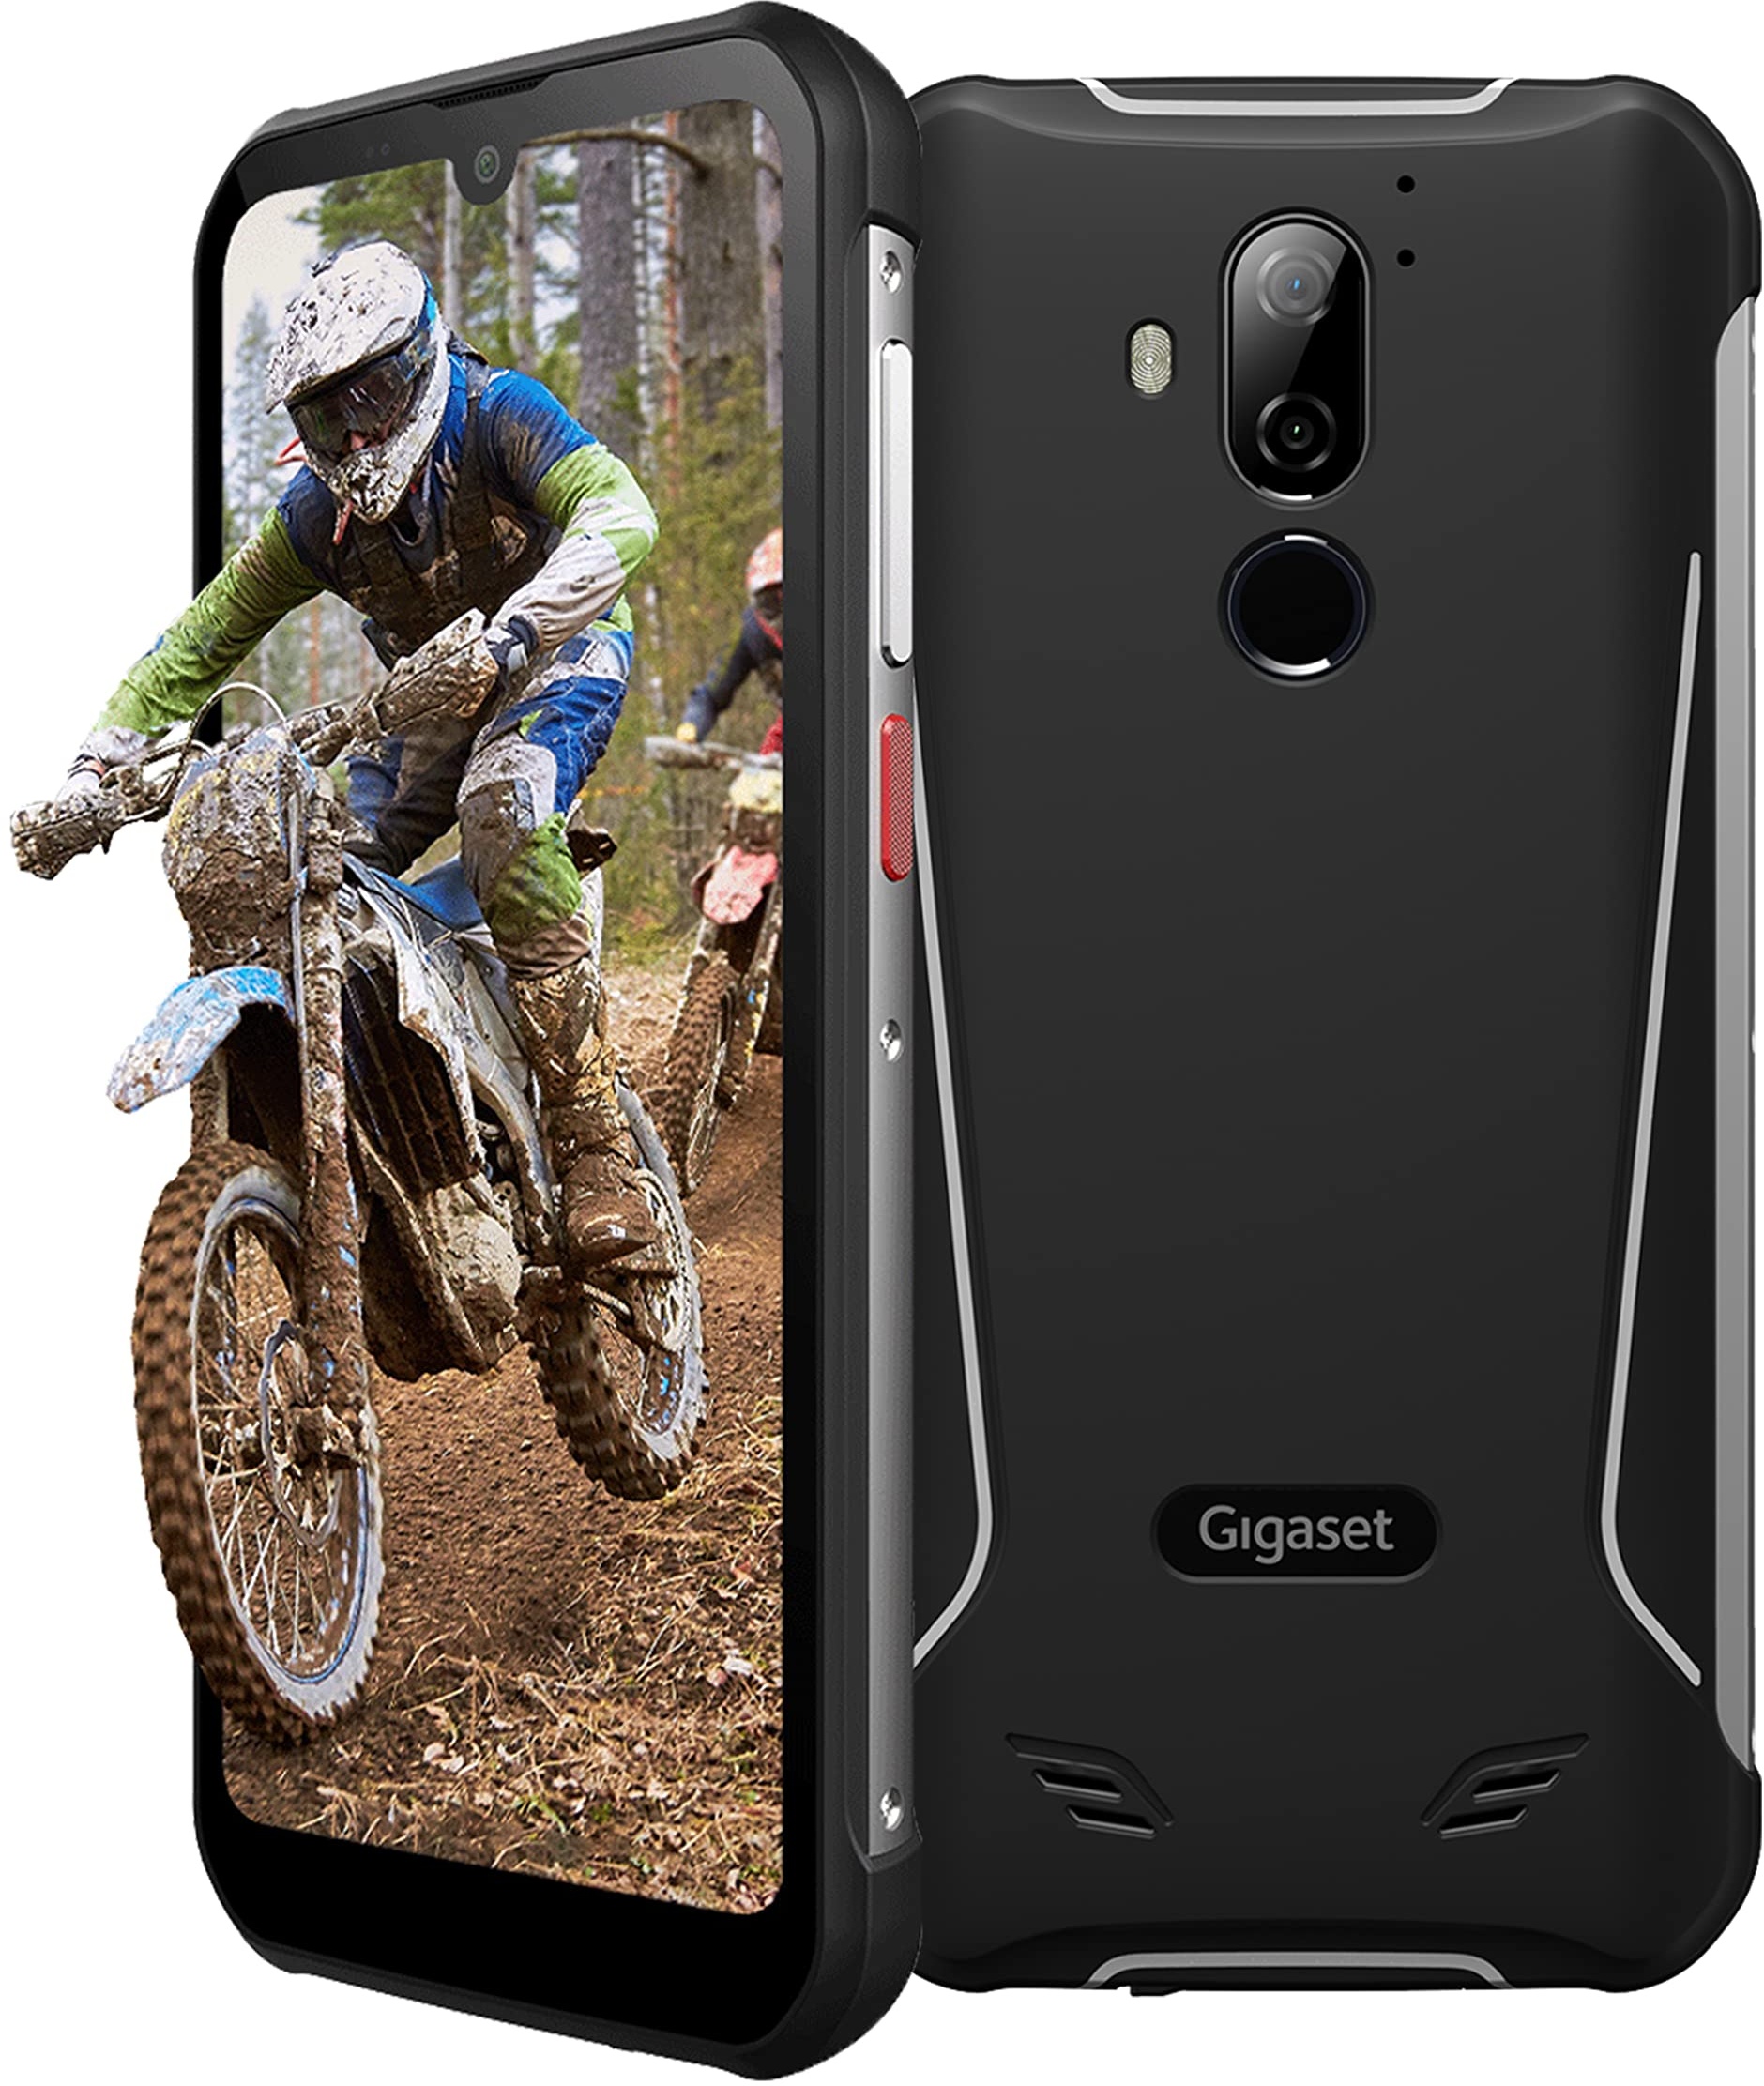 Gigaset GX290 Plus Outdoor Smartphone - wasserdicht IP68, Military Standard 810G - Display Corning Gorilla Glas 3 - 6200mAh Akku, Schnellladefunktion - 64GB+4GB Ram - Android 10, Black/Titanium Grey